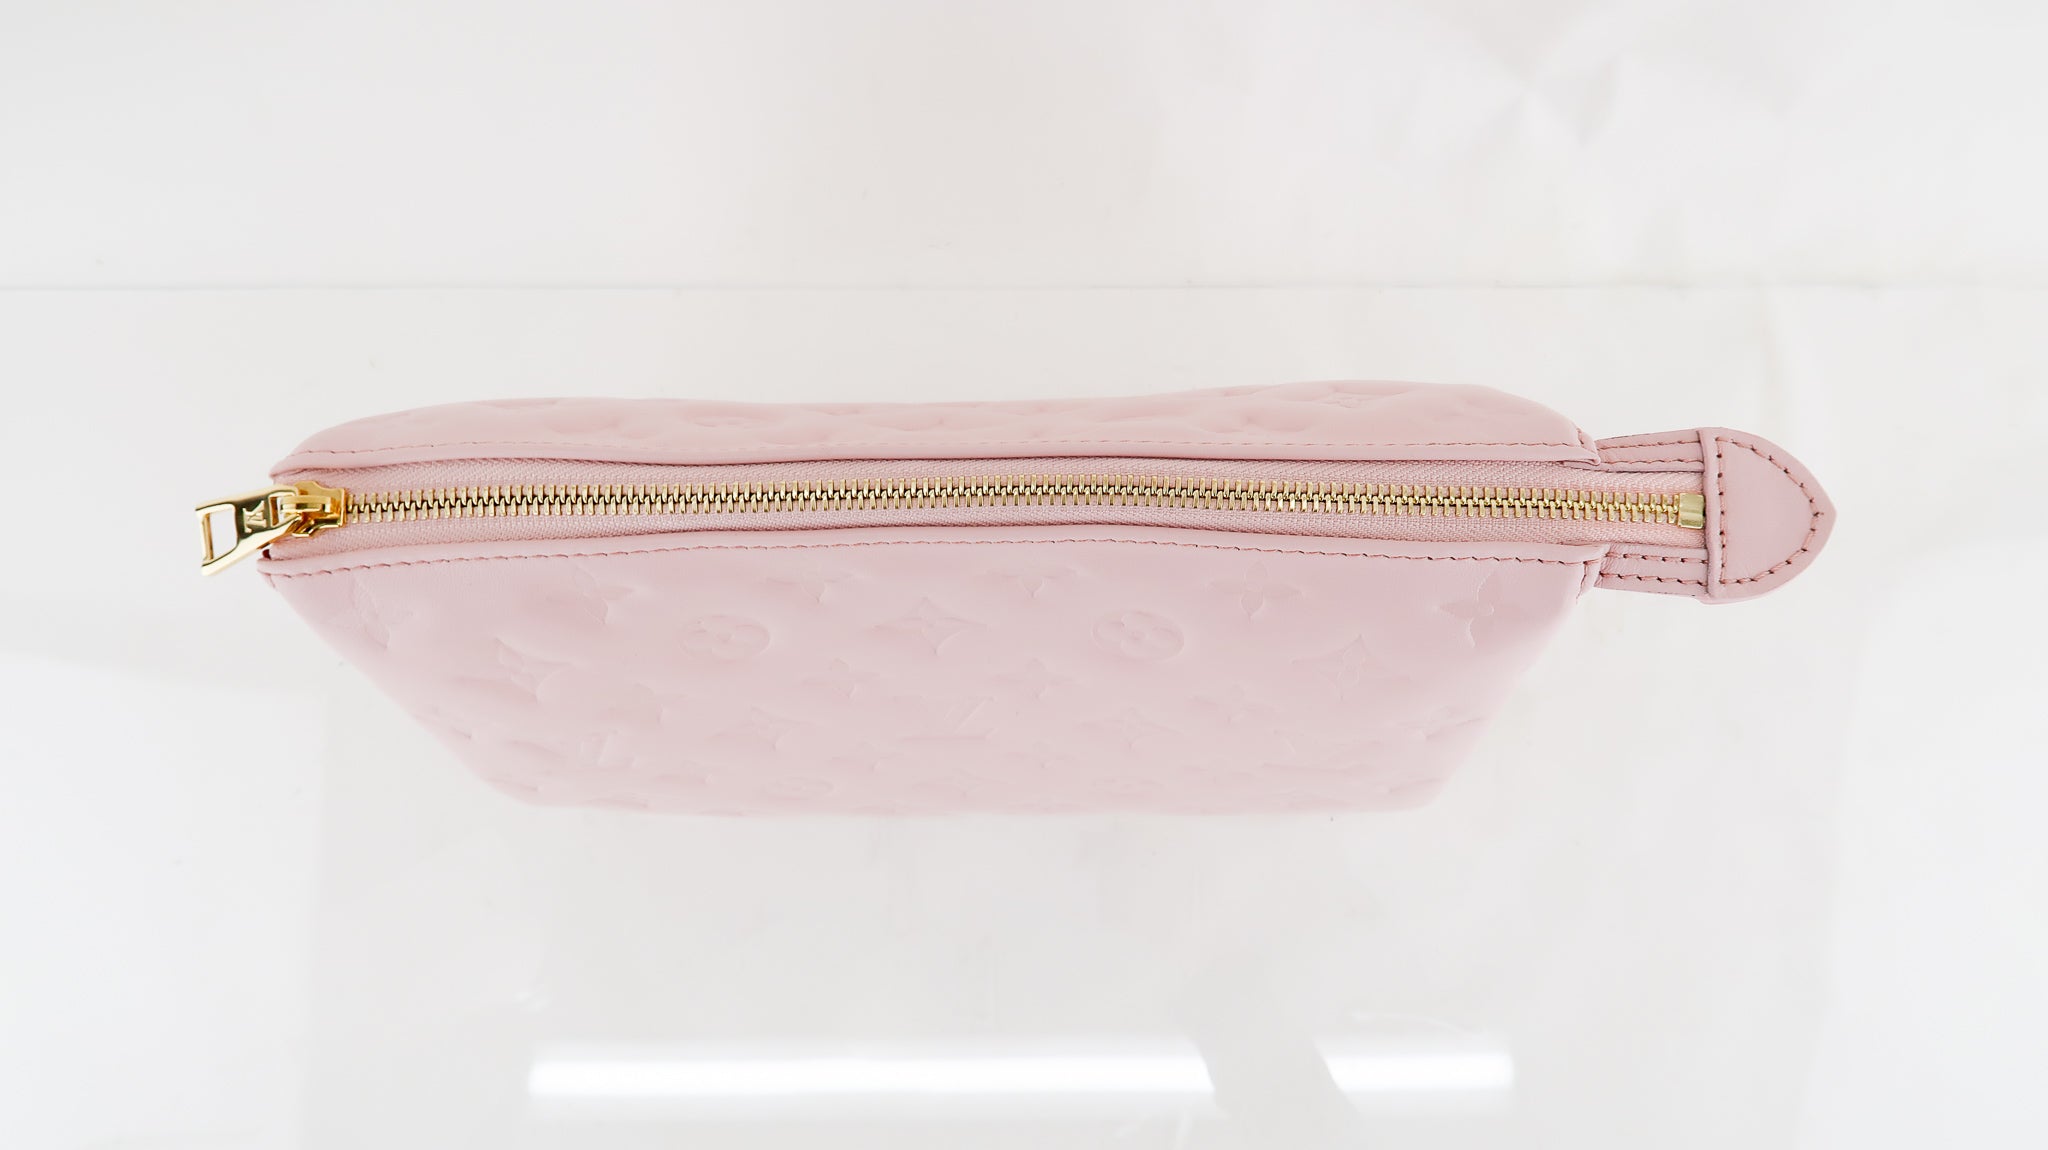 Louis Vuitton Coussin PM M21773 Hot Pink